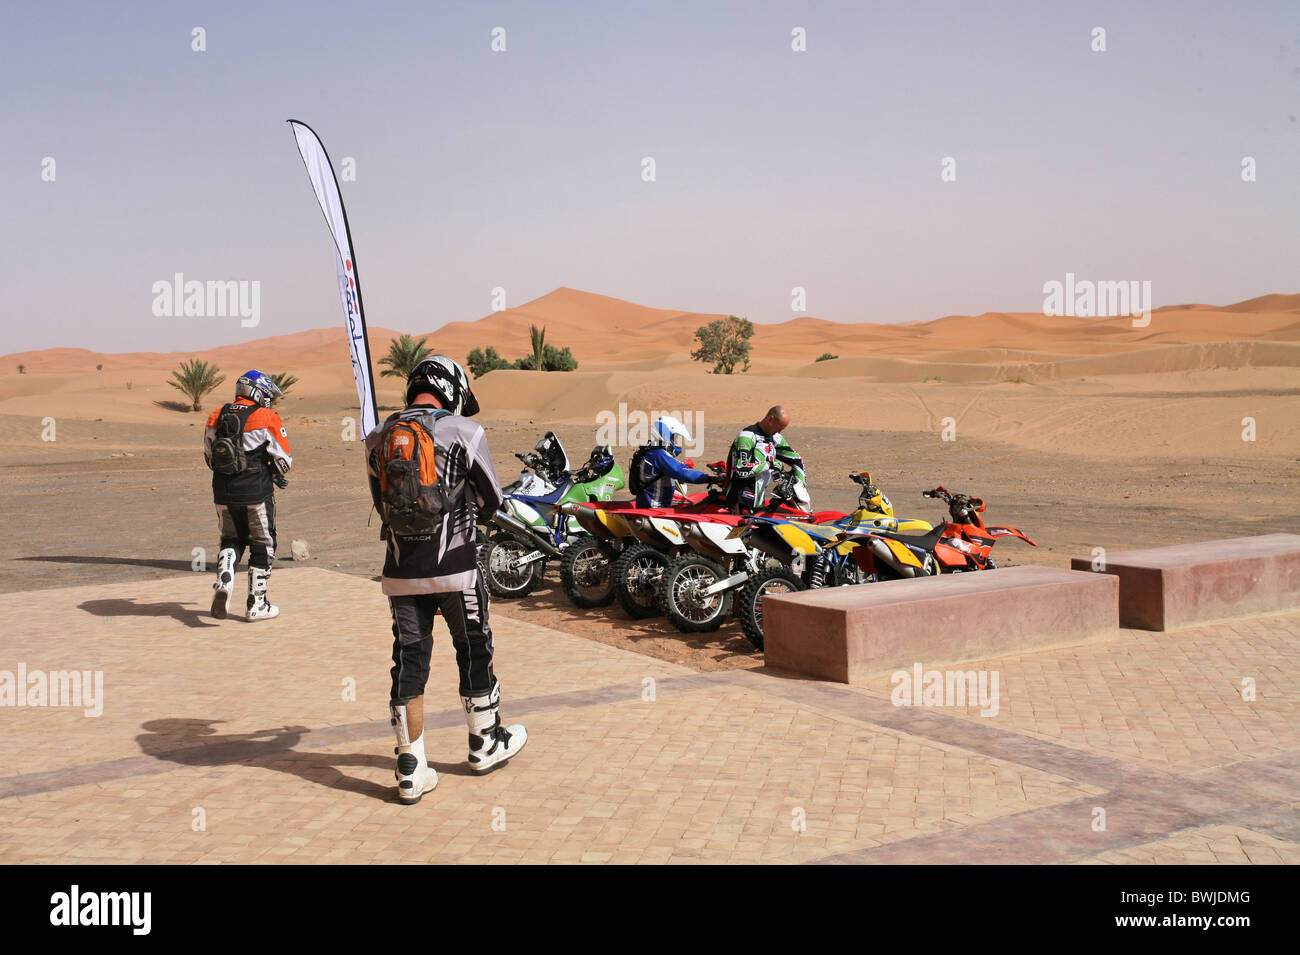 motor sport moto cross Enduro adventure Motrrad motorcycles motorbikes desert Sahara Merzouga Morocco Africa Stock Photo